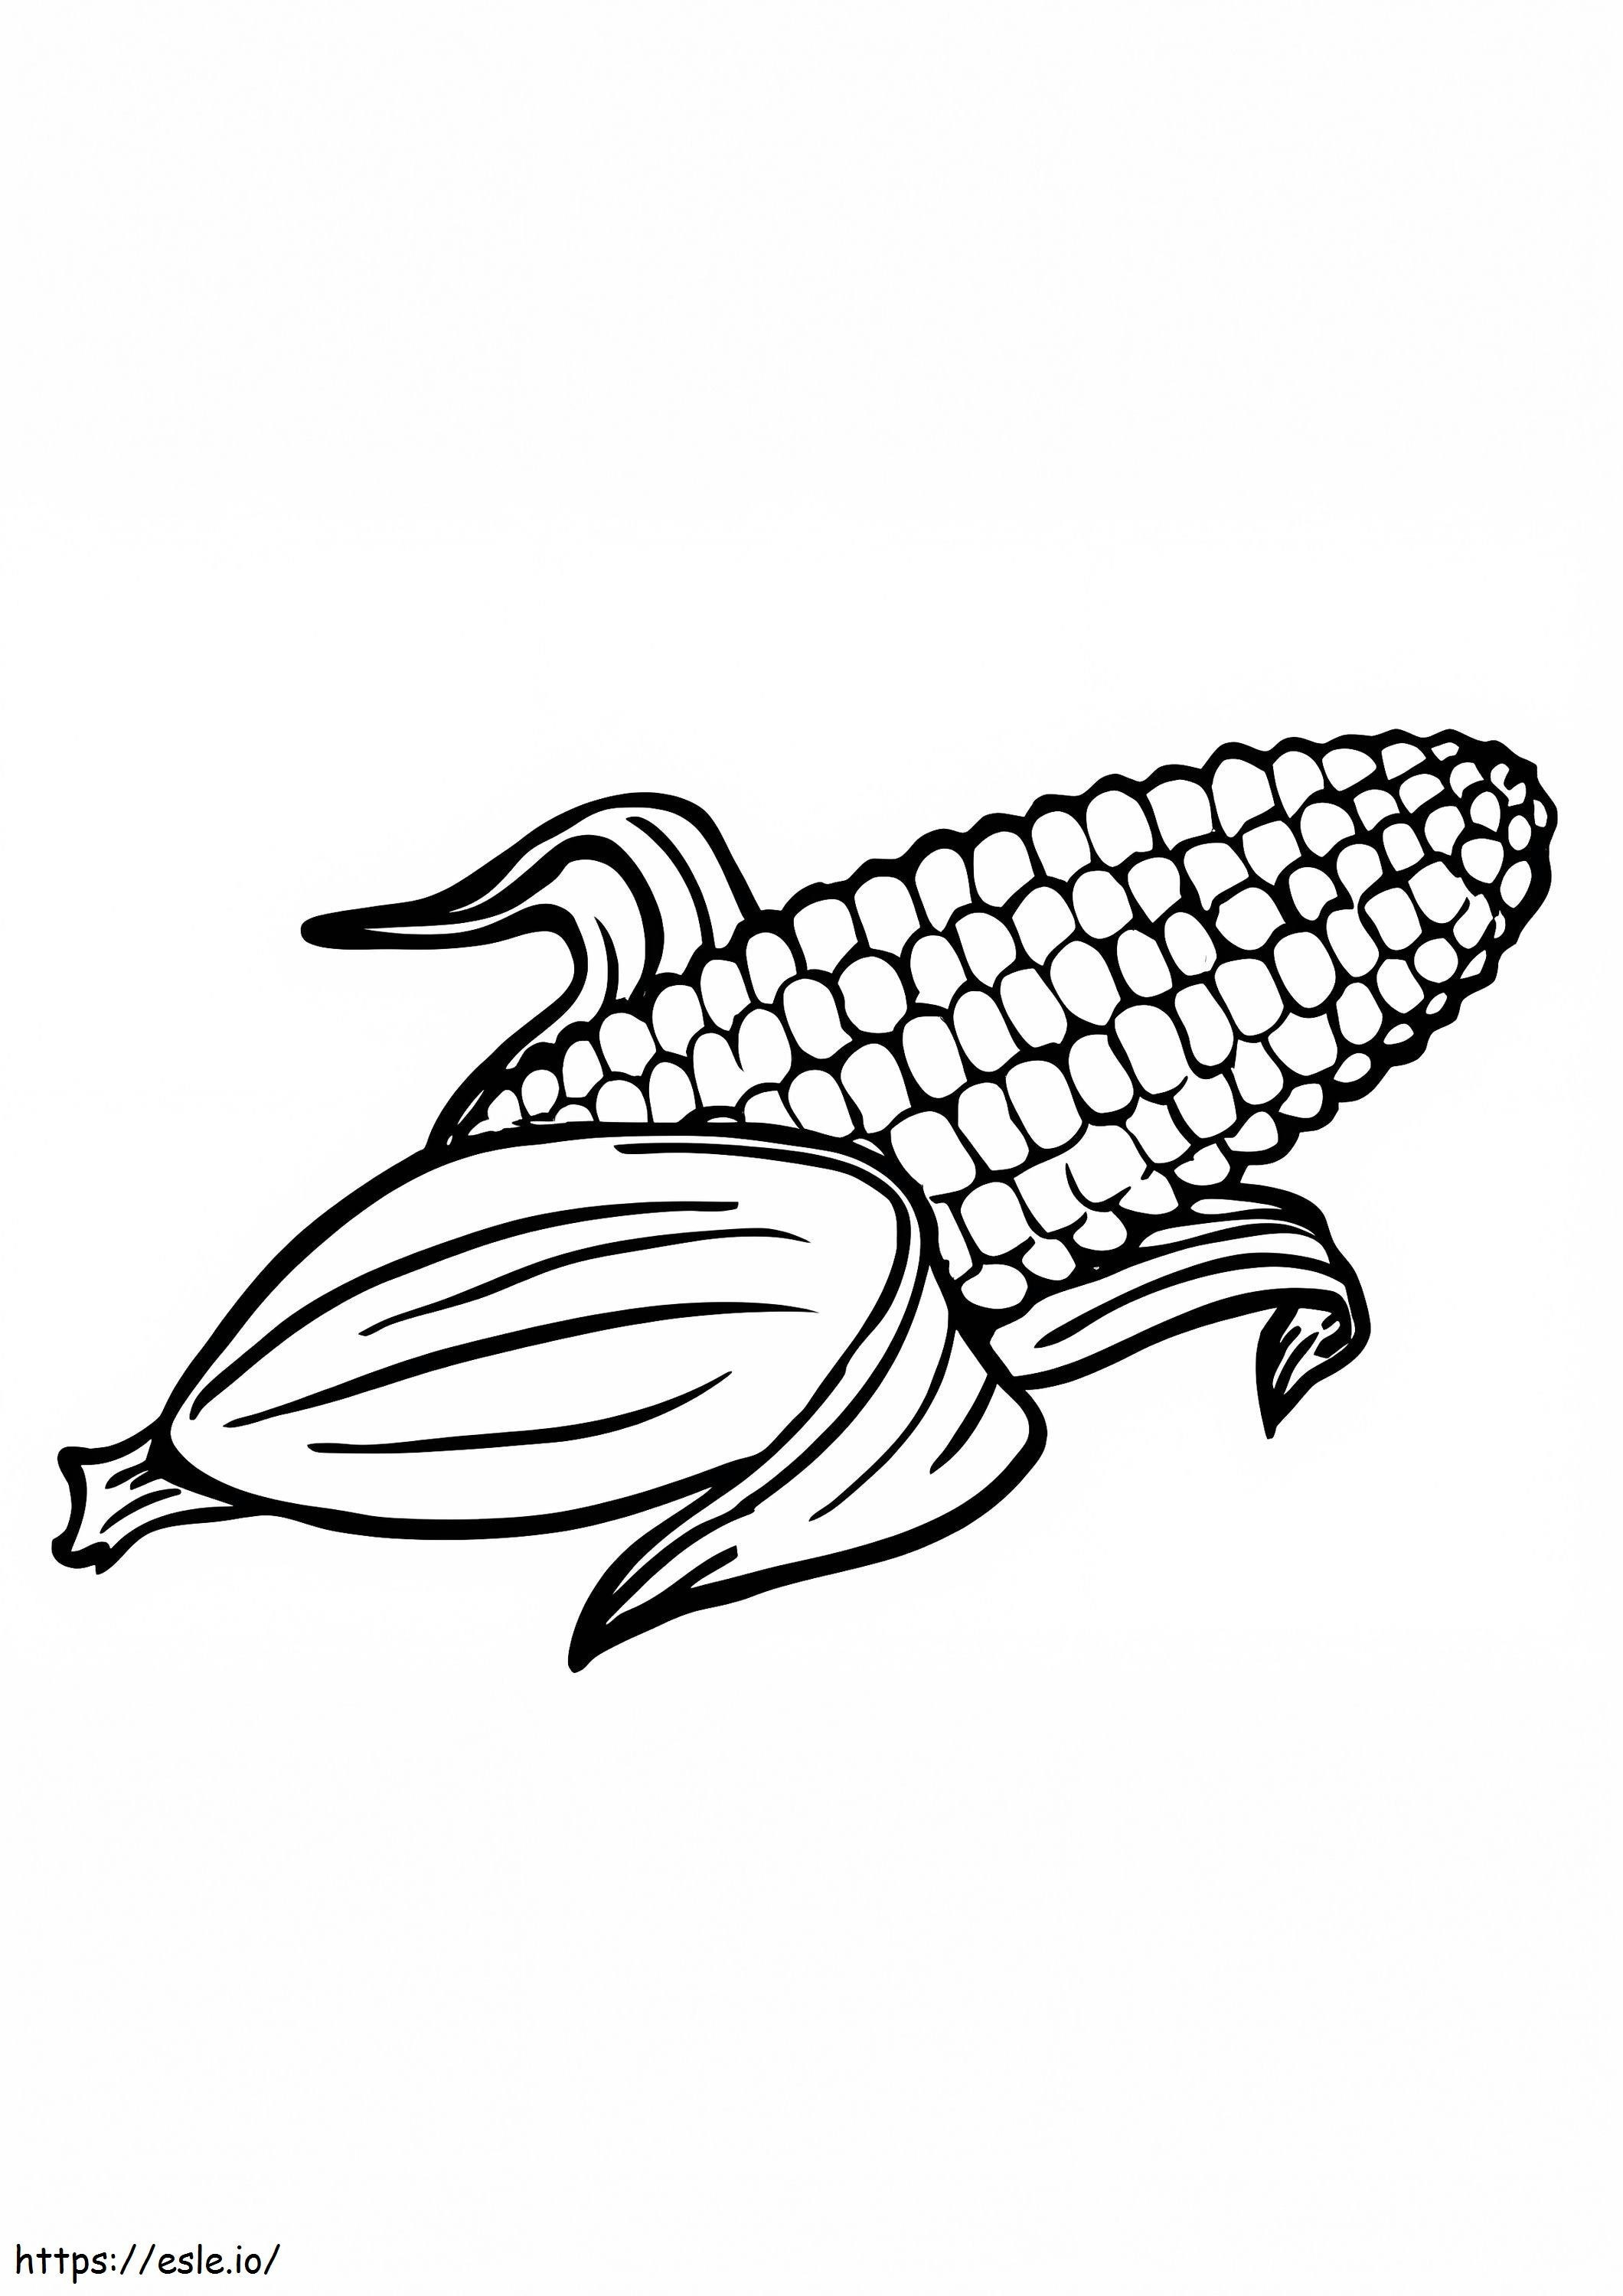 Big Corn coloring page